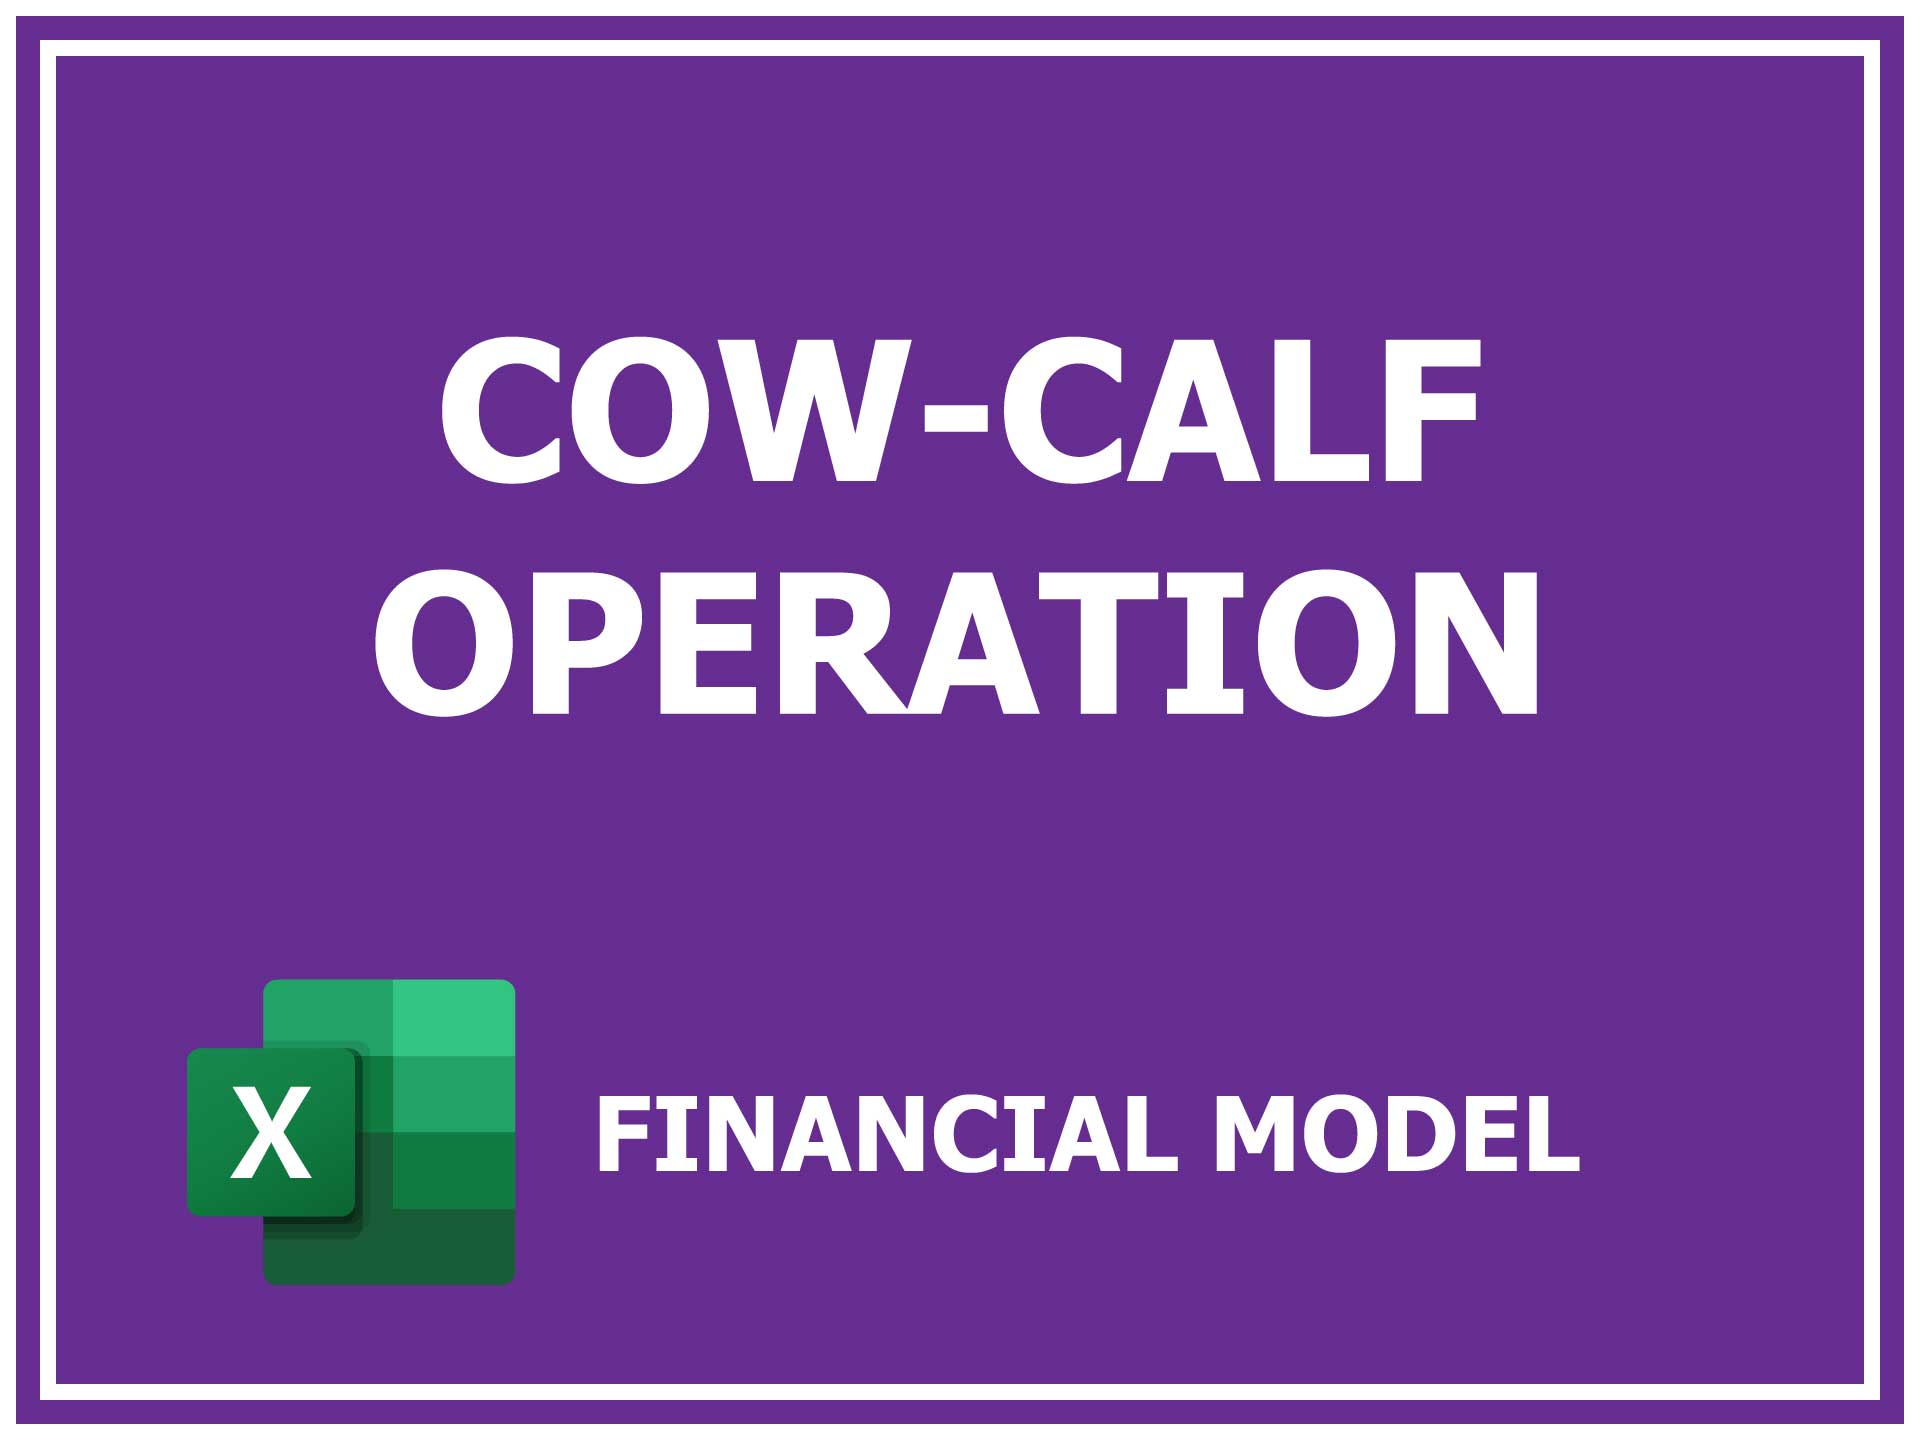 Cow Calf Operation